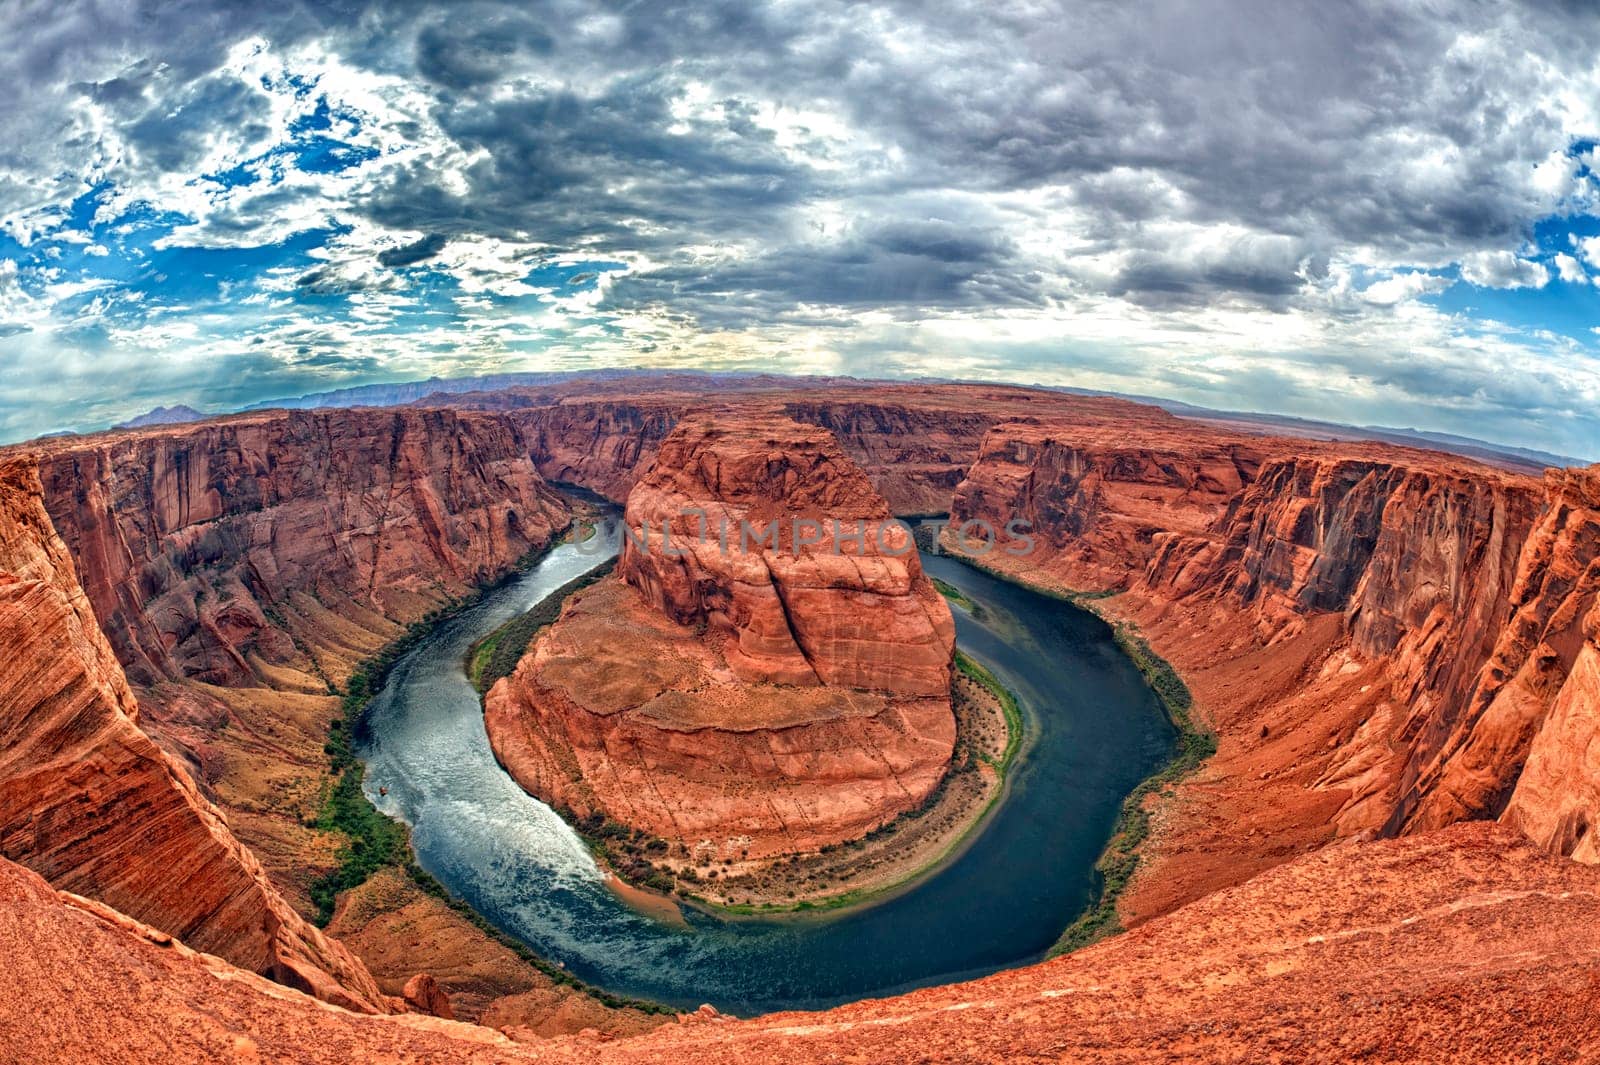 horseshoe bend colorado river at 360 degrees near page arizona